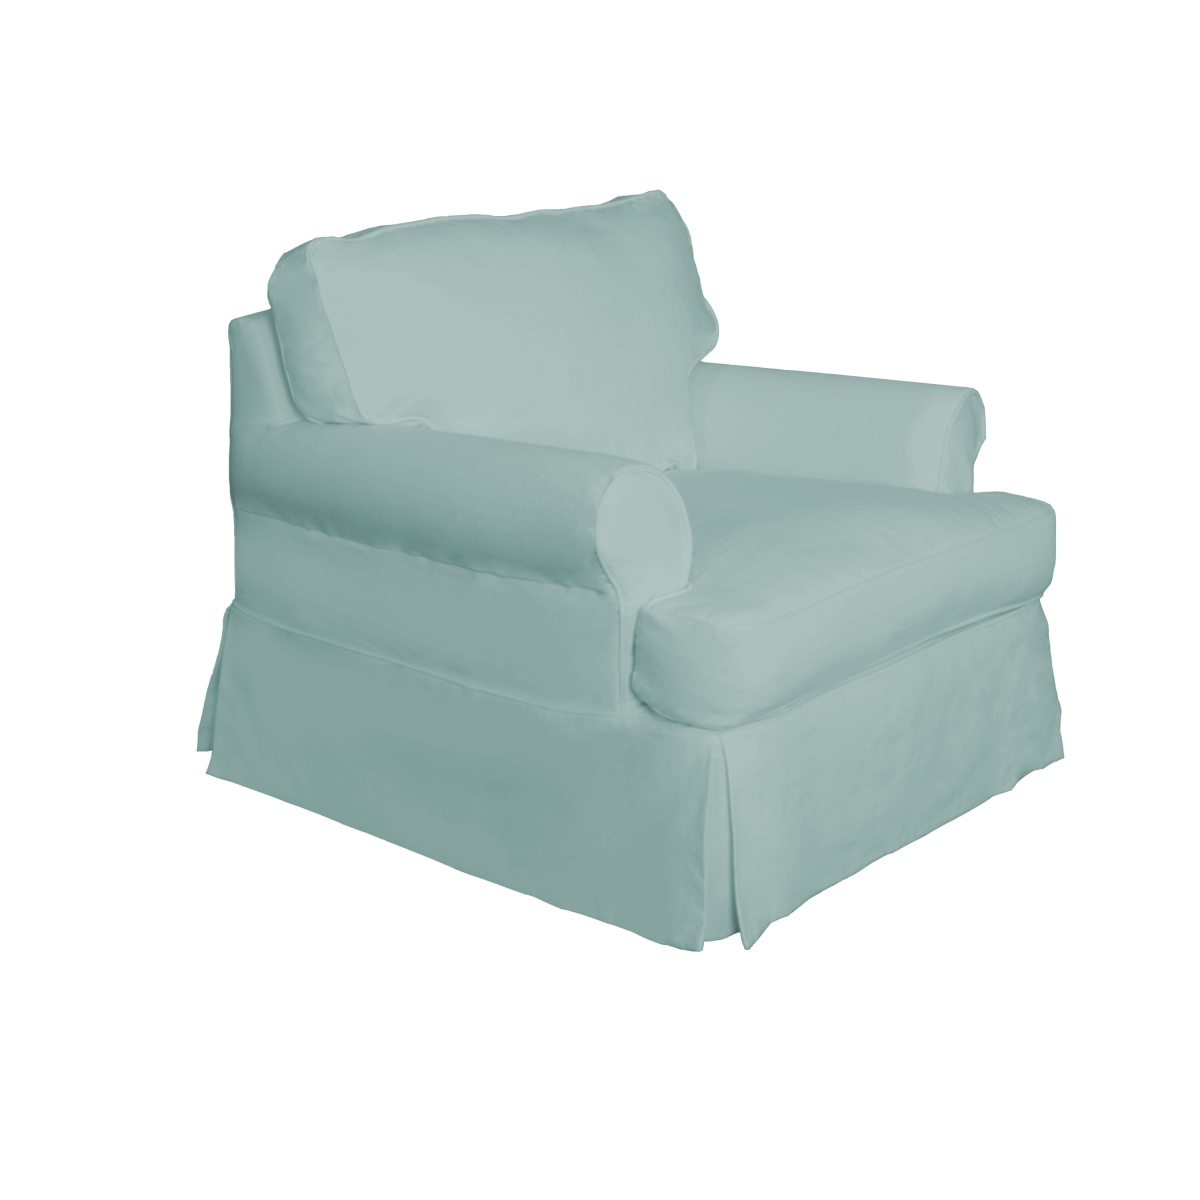 UPC 097652002605 product image for Sunset Trading SU-117620-391043 Horizon Slipcovered T-Cushion Chair Ocean Blue - | upcitemdb.com